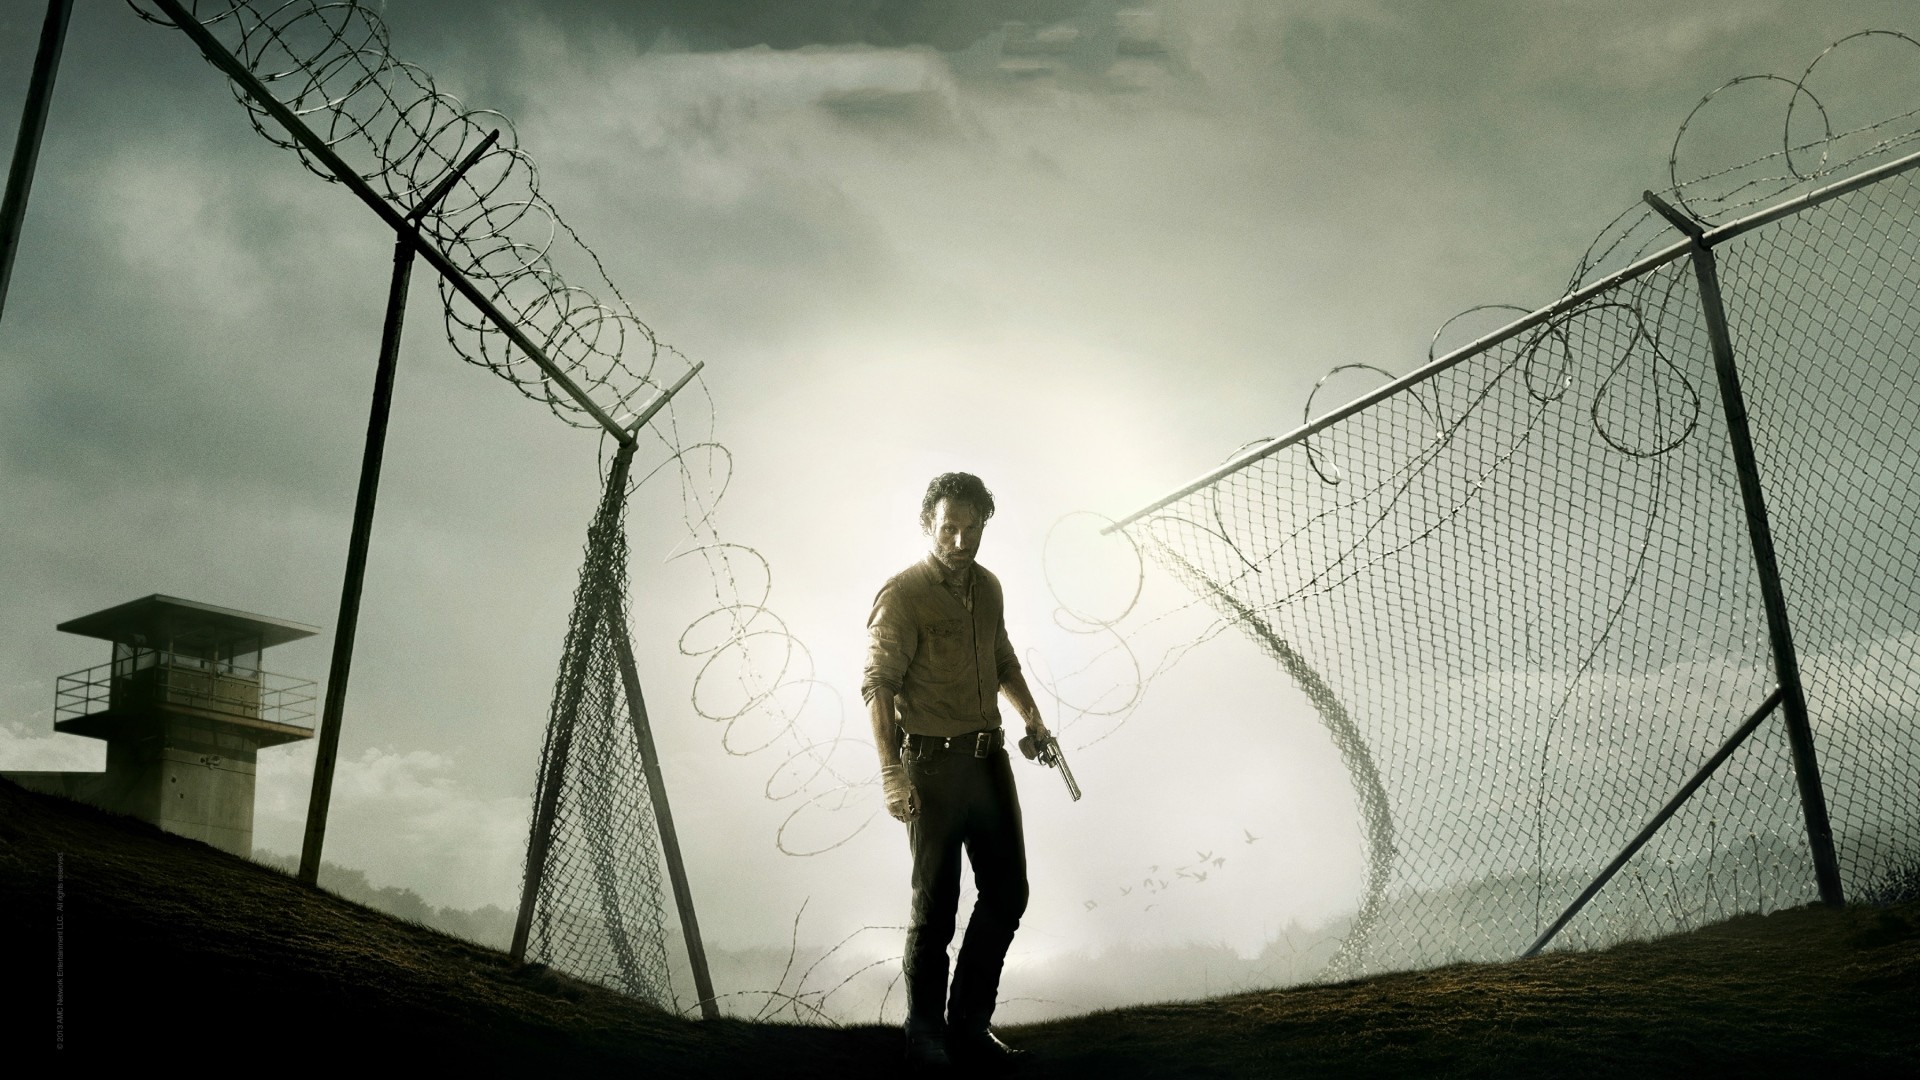 Wallpaper The Walking Dead Rick Grimes Andrew Lincoln Season 8 images  for desktop section фильмы  download